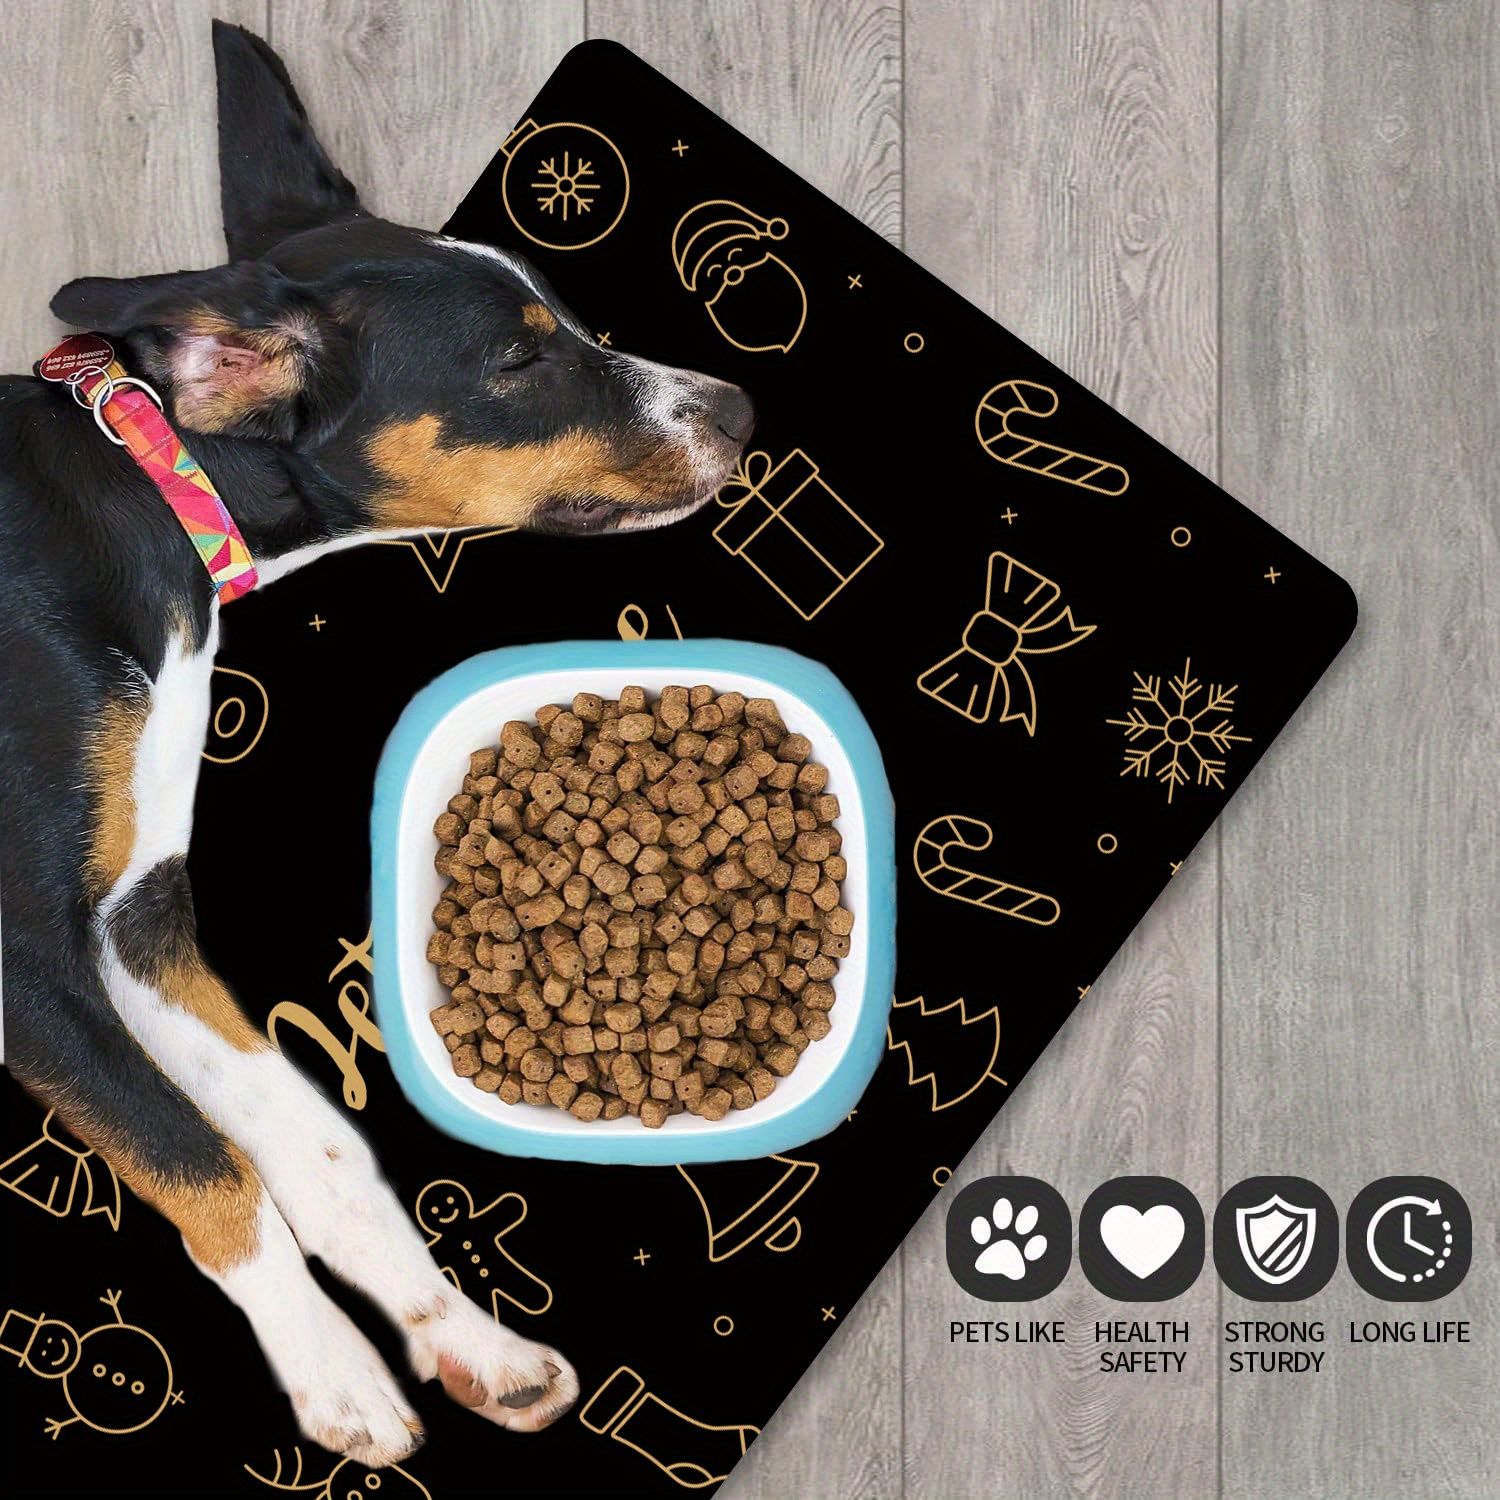 Personalized Dog Mats Using Pet Photo Name Personalized Dog Food Mat  Personalized Dog Placemat Custom Dog Bowl Mat Personalized Pet Mat 